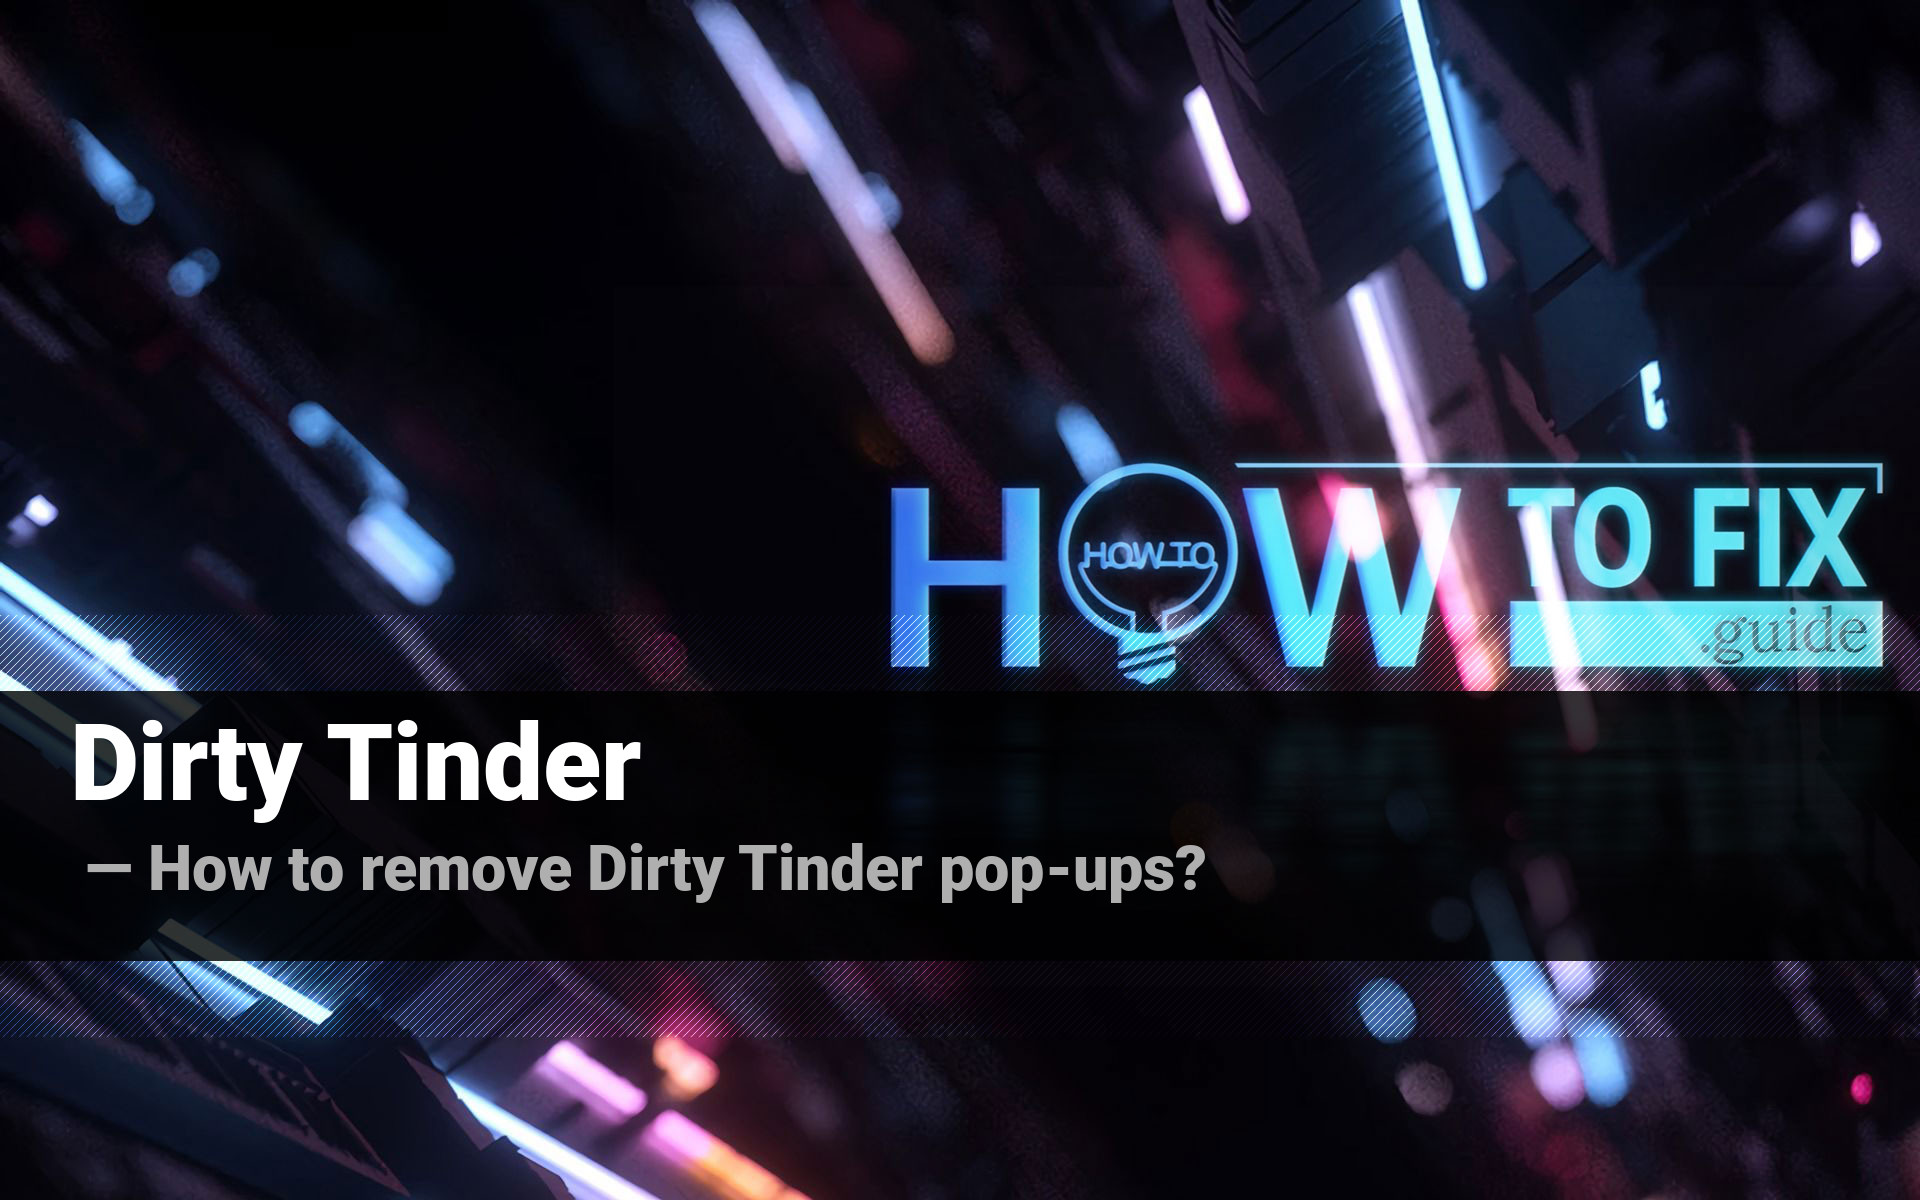 Dirty tinder app